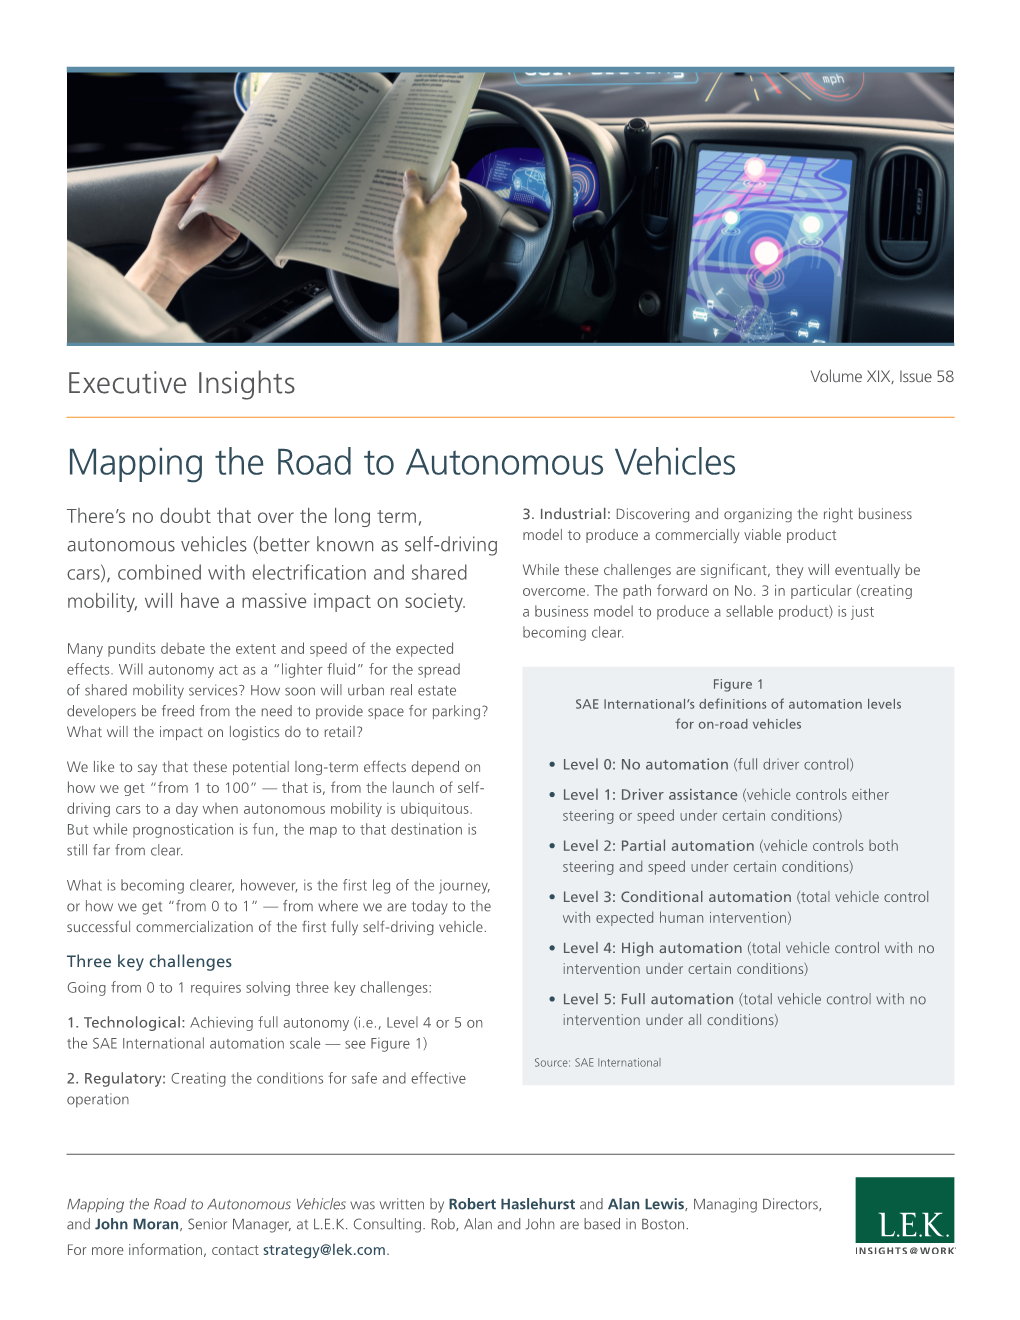 Autonomous Vehicles Future: Driverless Cars